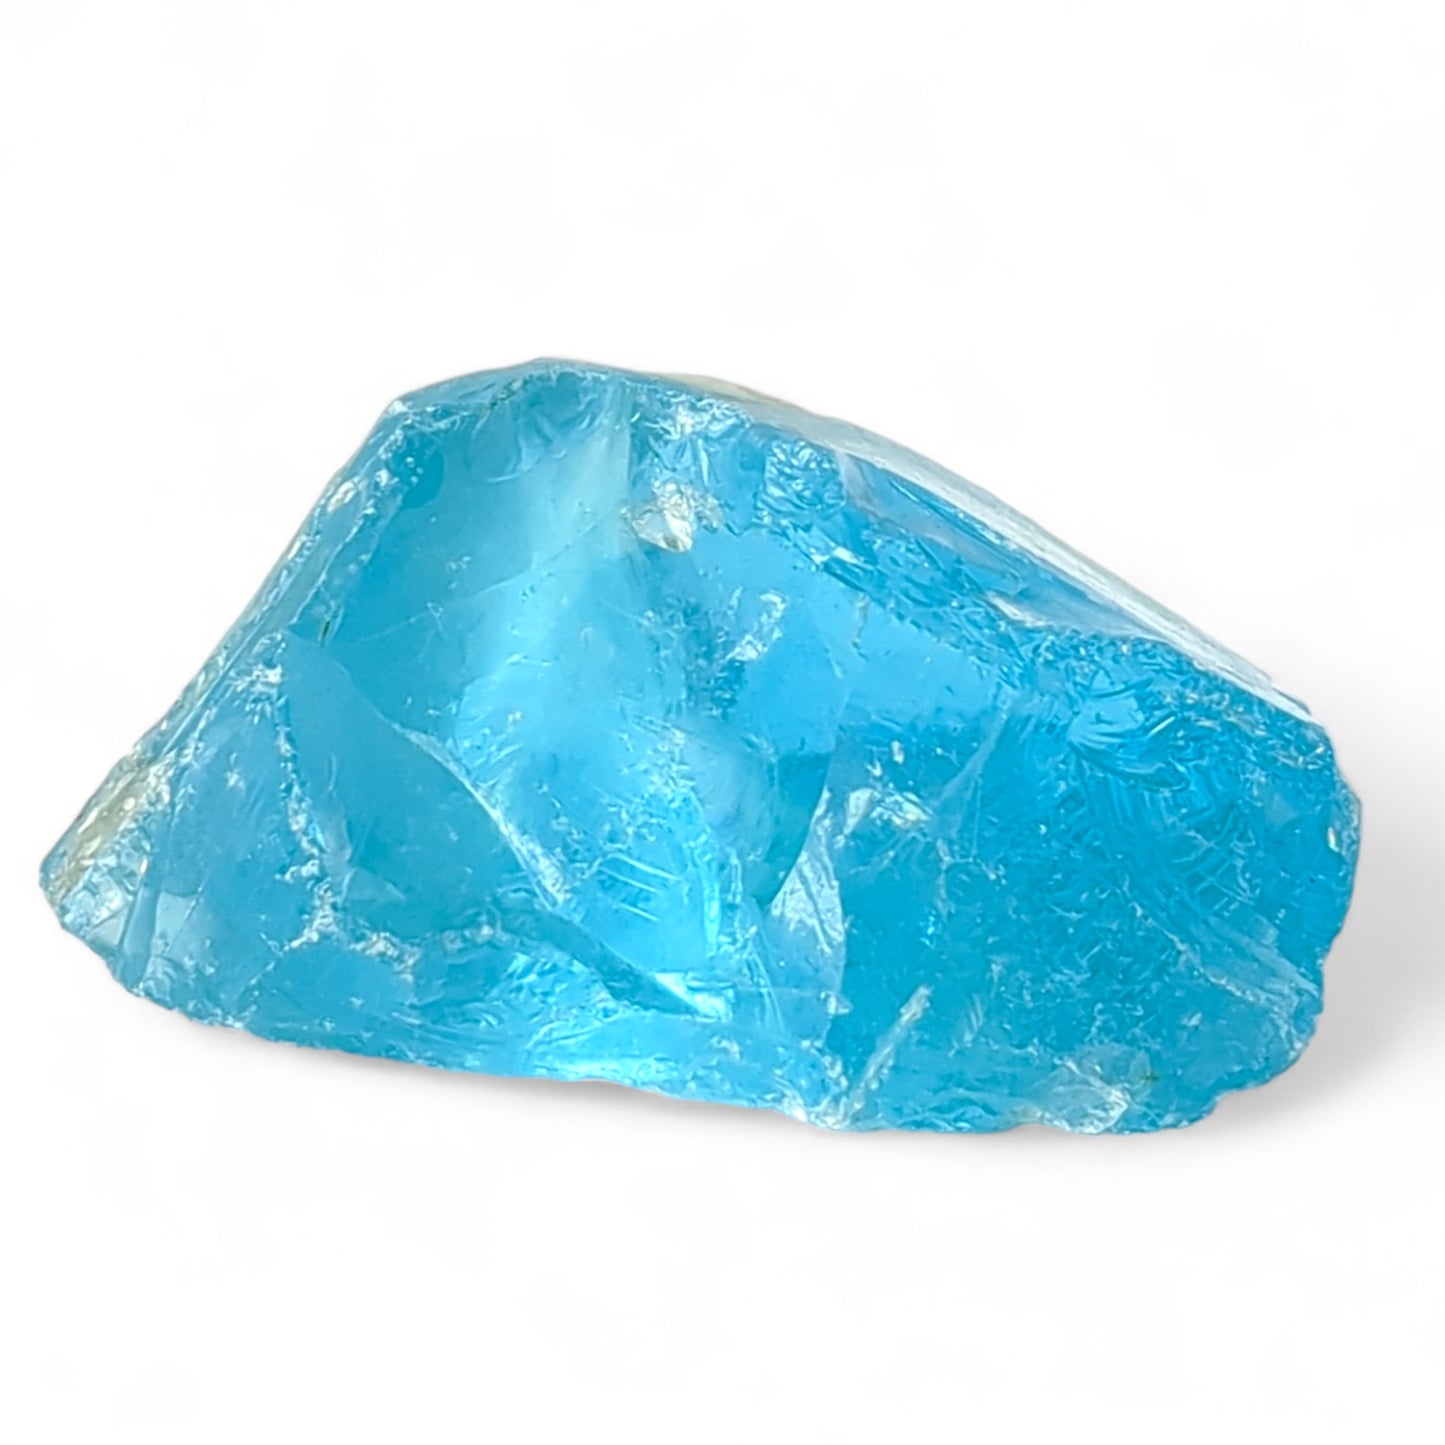 Satin Blue Art Glass Cullet Glowing Translucent Manganese Slag Glass #4GM100